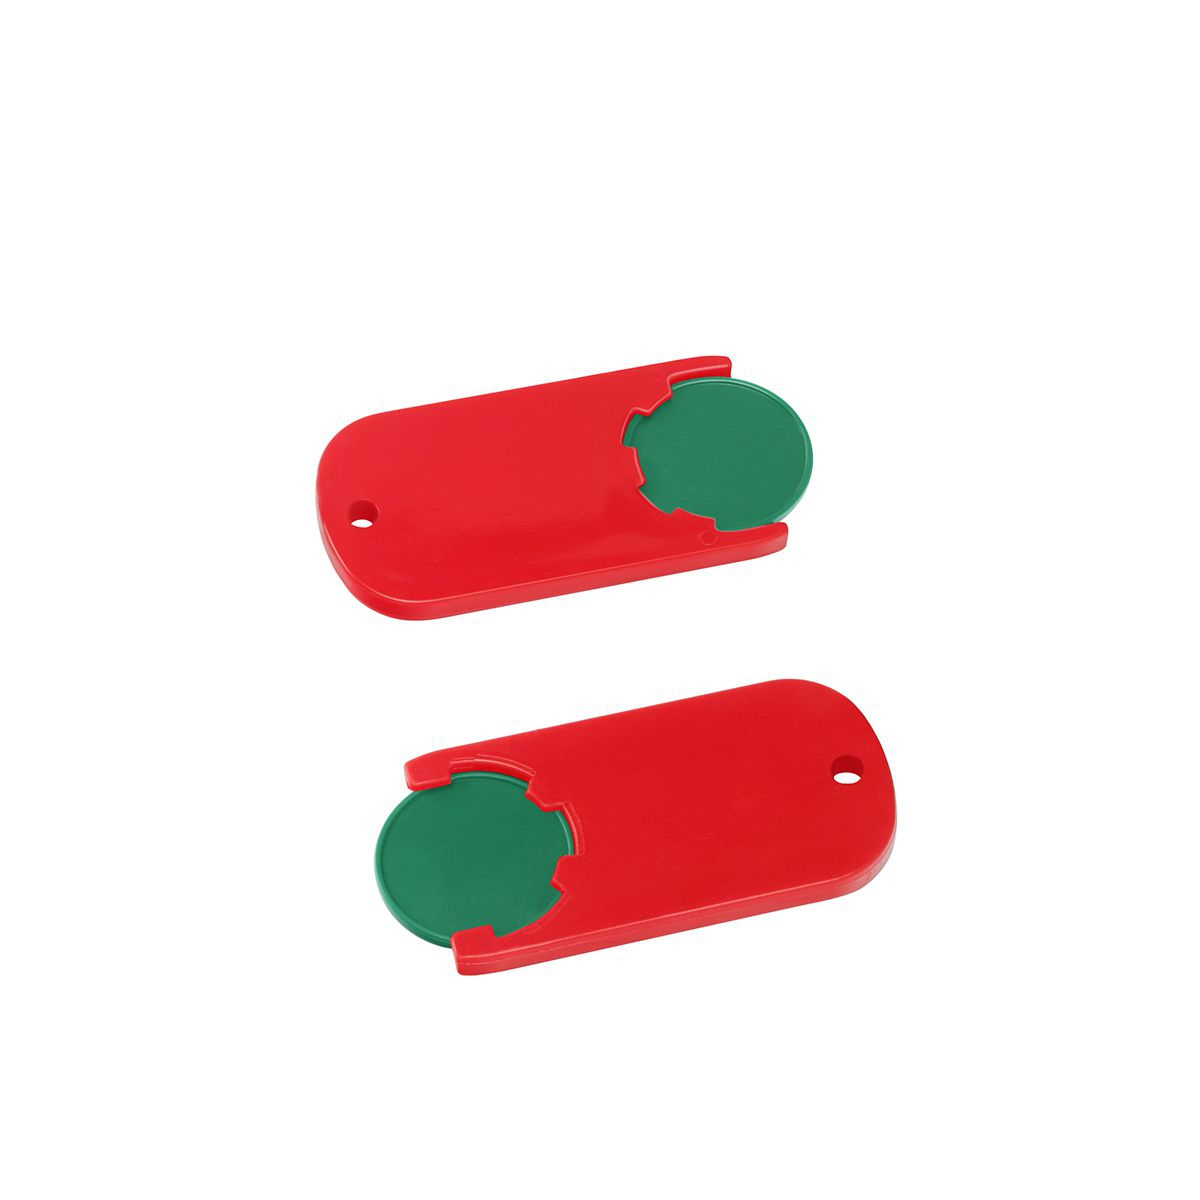 Chiphalter mit 1€-Chip "Alpha", grün, rot